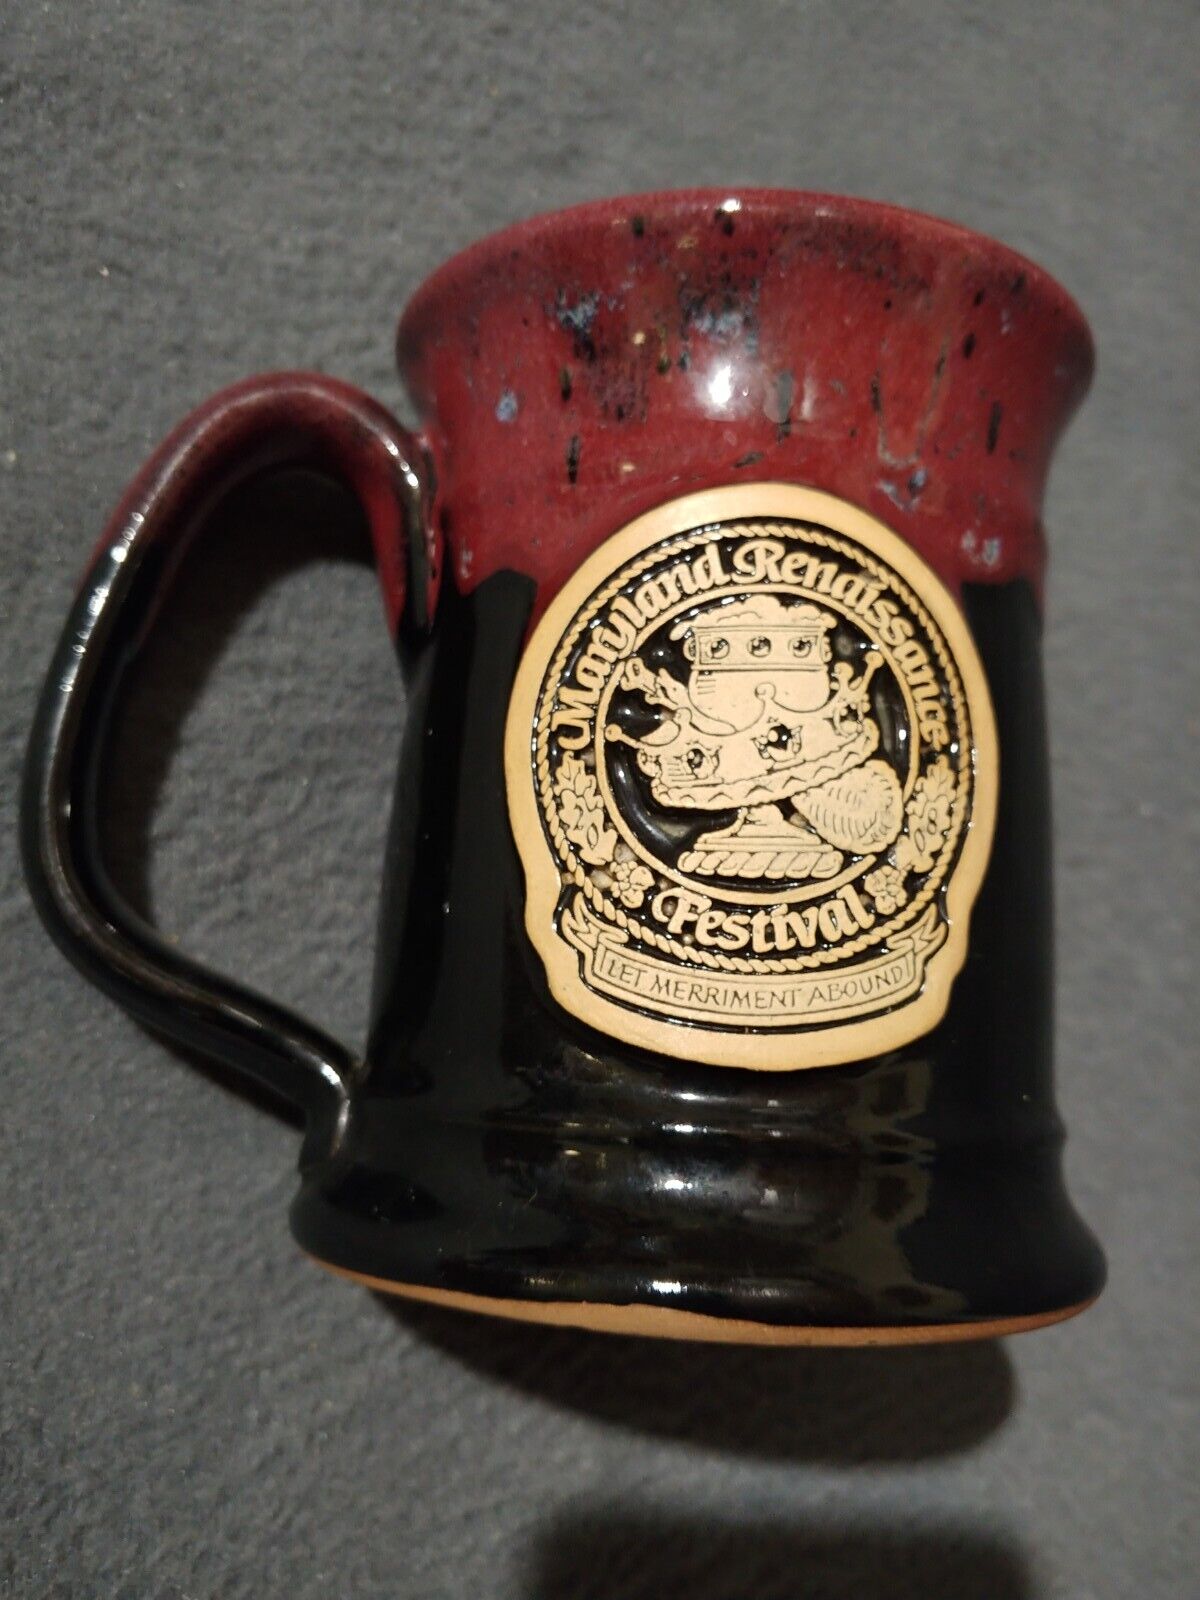 2008 Grey Fox Pottery Maryland Renaissance  Festival Mug Black & Red Drip Glaze